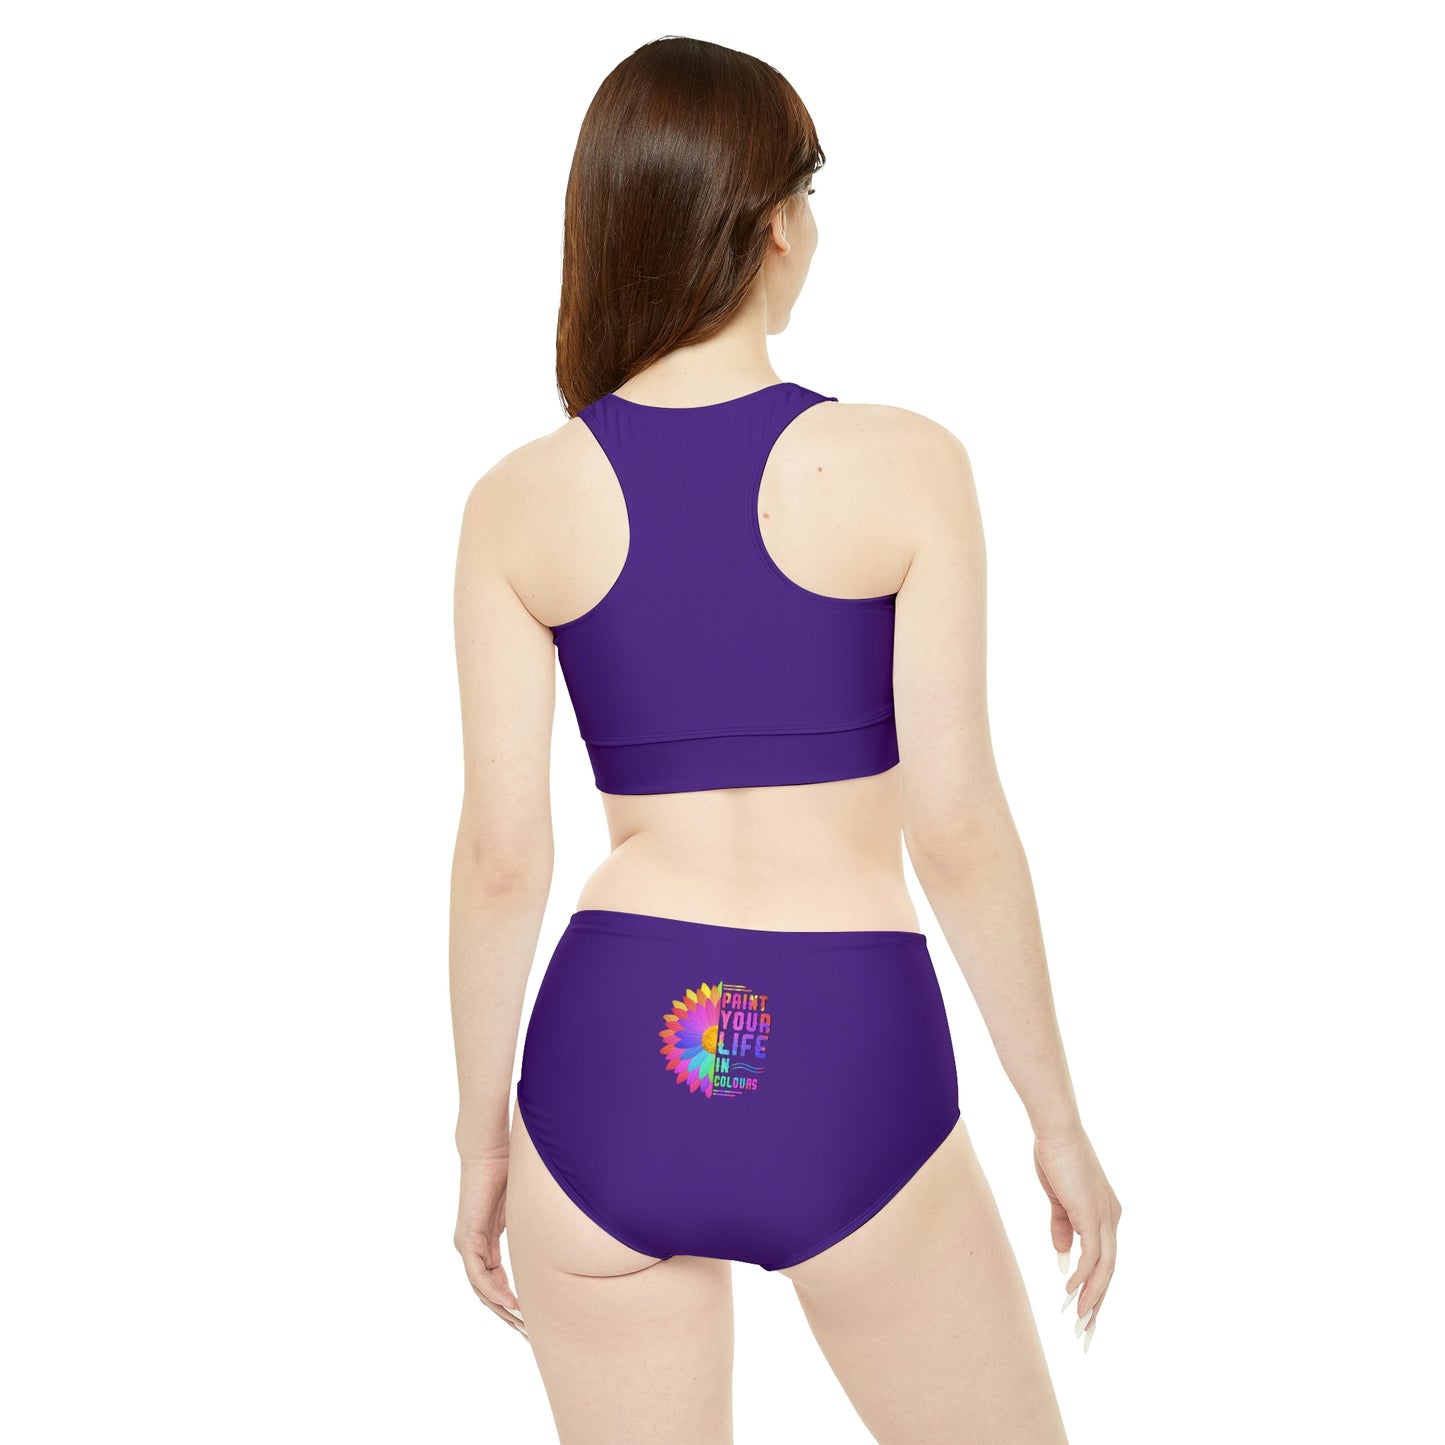 Paint your life in colours - Sporty Bikini Set - HobbyMeFree